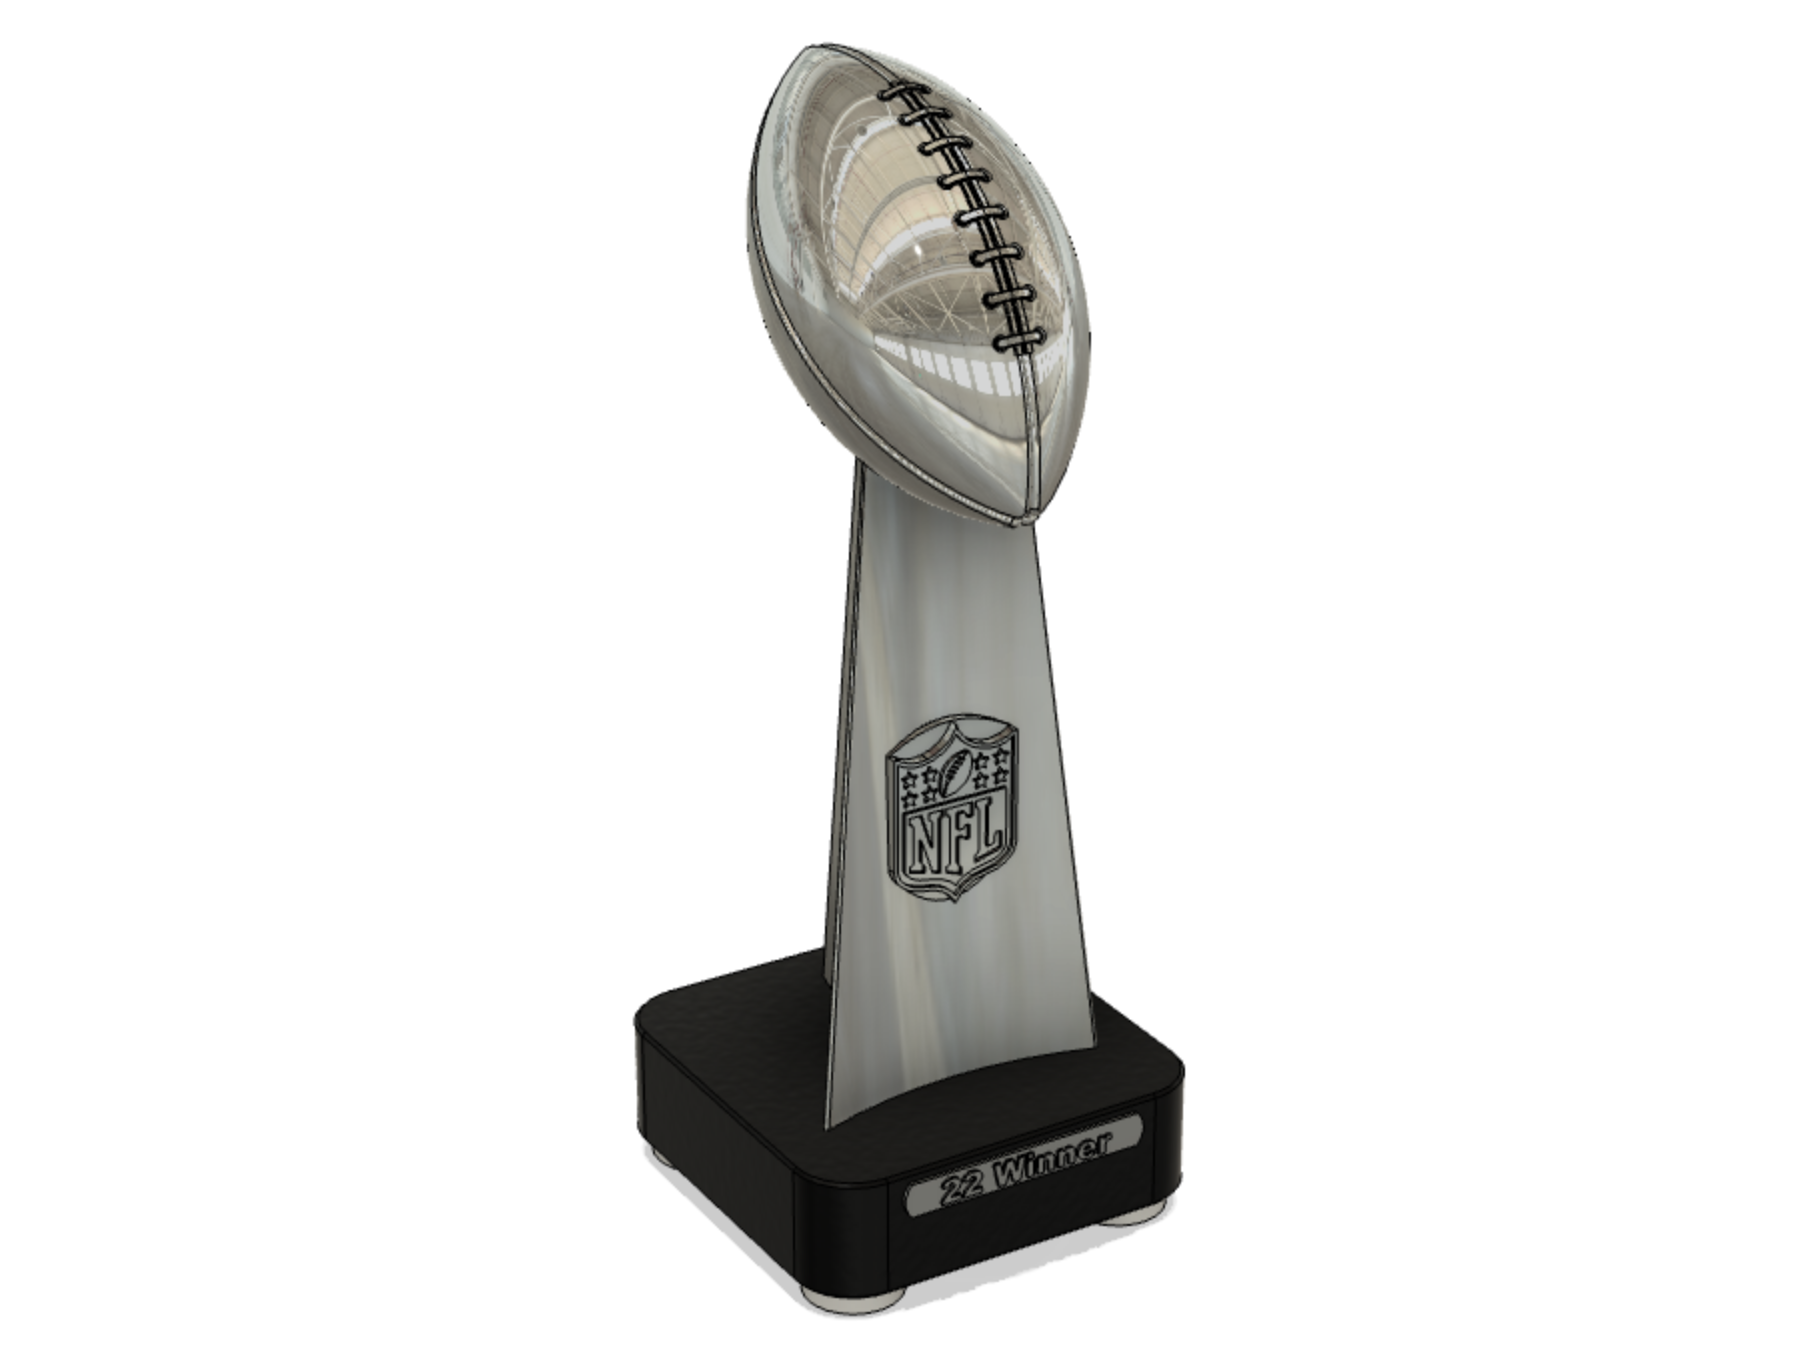 Super Bowl Lombardi Trophy